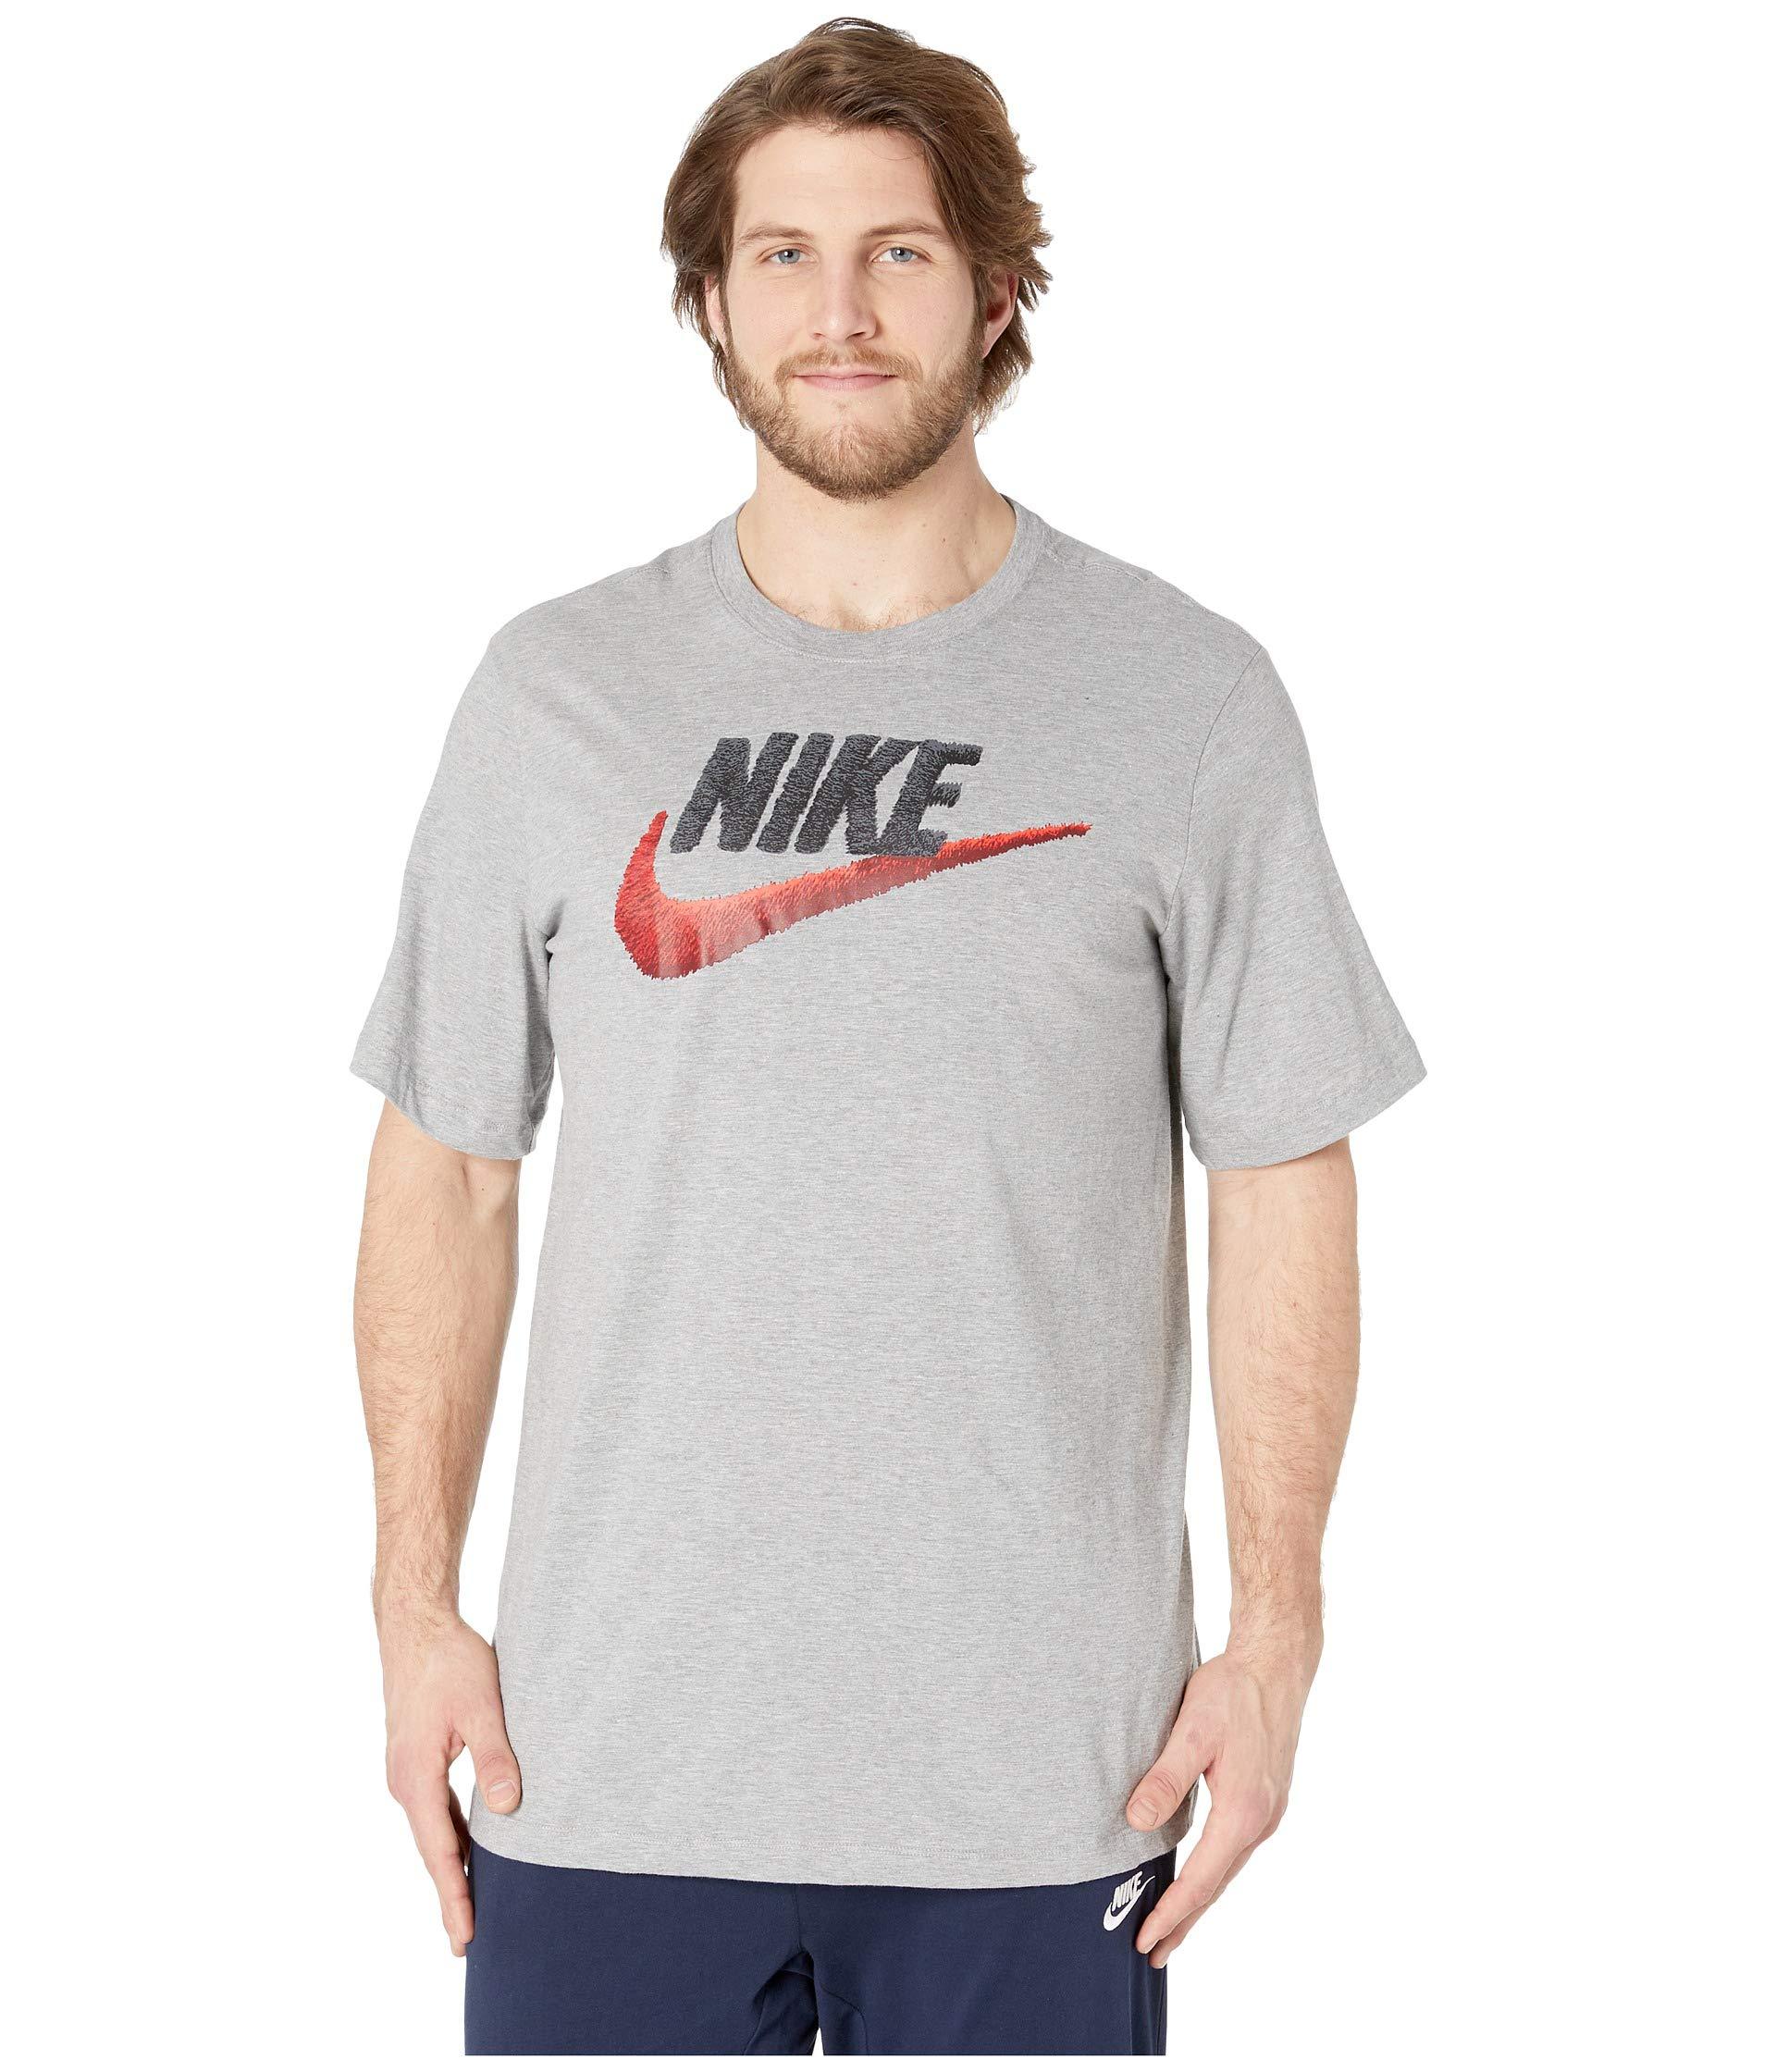 Lyst - Nike Big Tall Nsw Brand Mark Tee (obsidian/armory Blue/light Cream) Men's T Shirt in Gray 